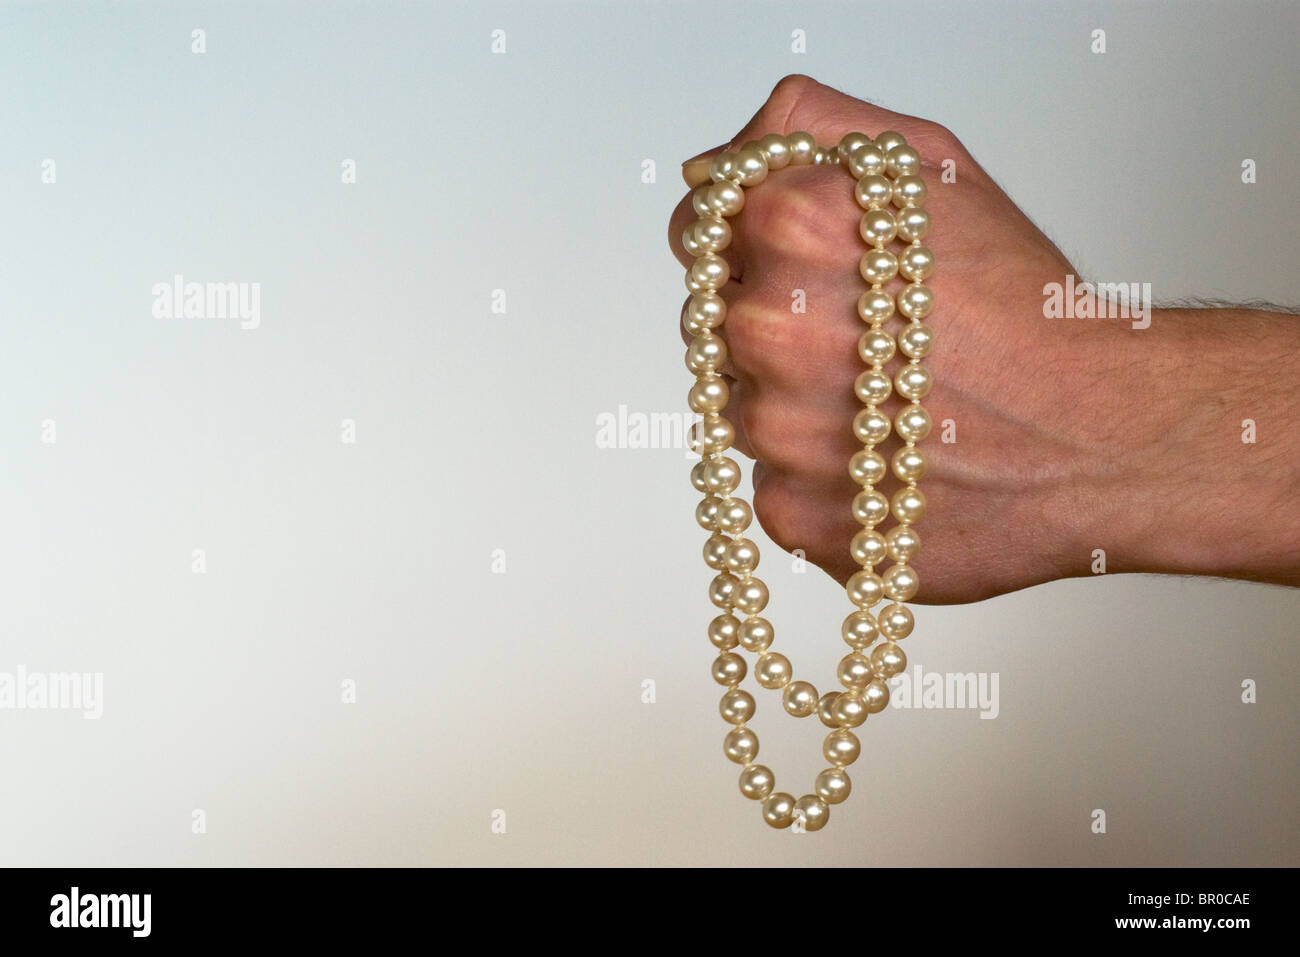 male-hand-clutching-pearls-BR0CAE.jpg